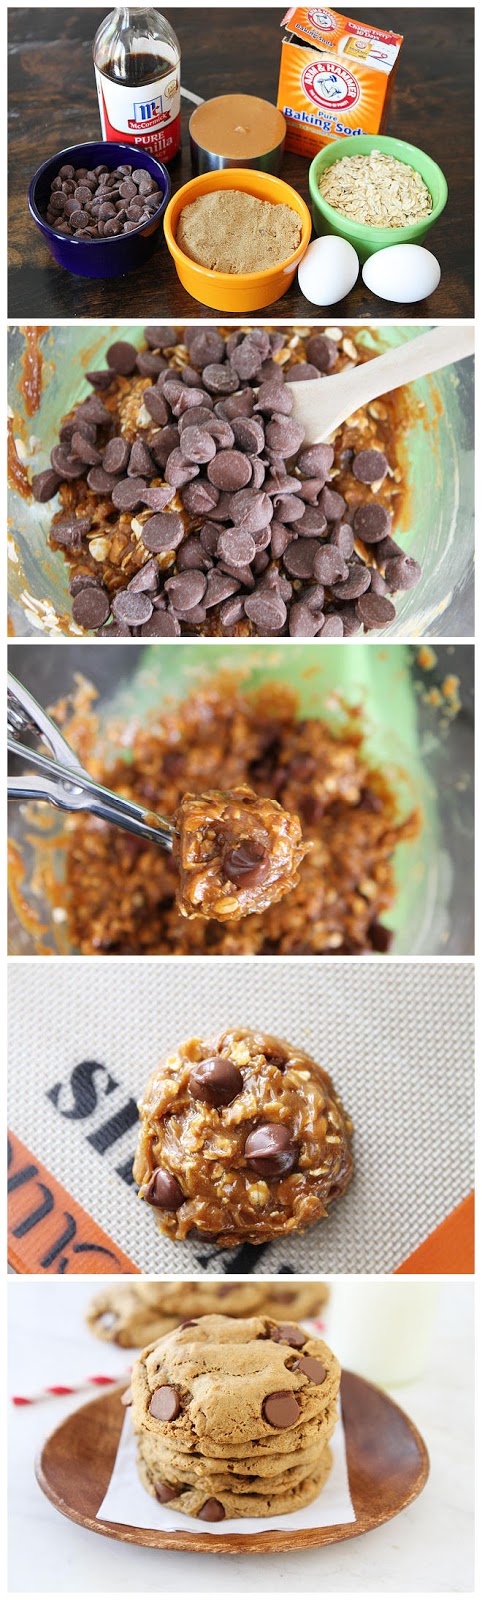 Flourless-Peanut-Butter-Oatmeal-Chocolate-Chip-Cookies